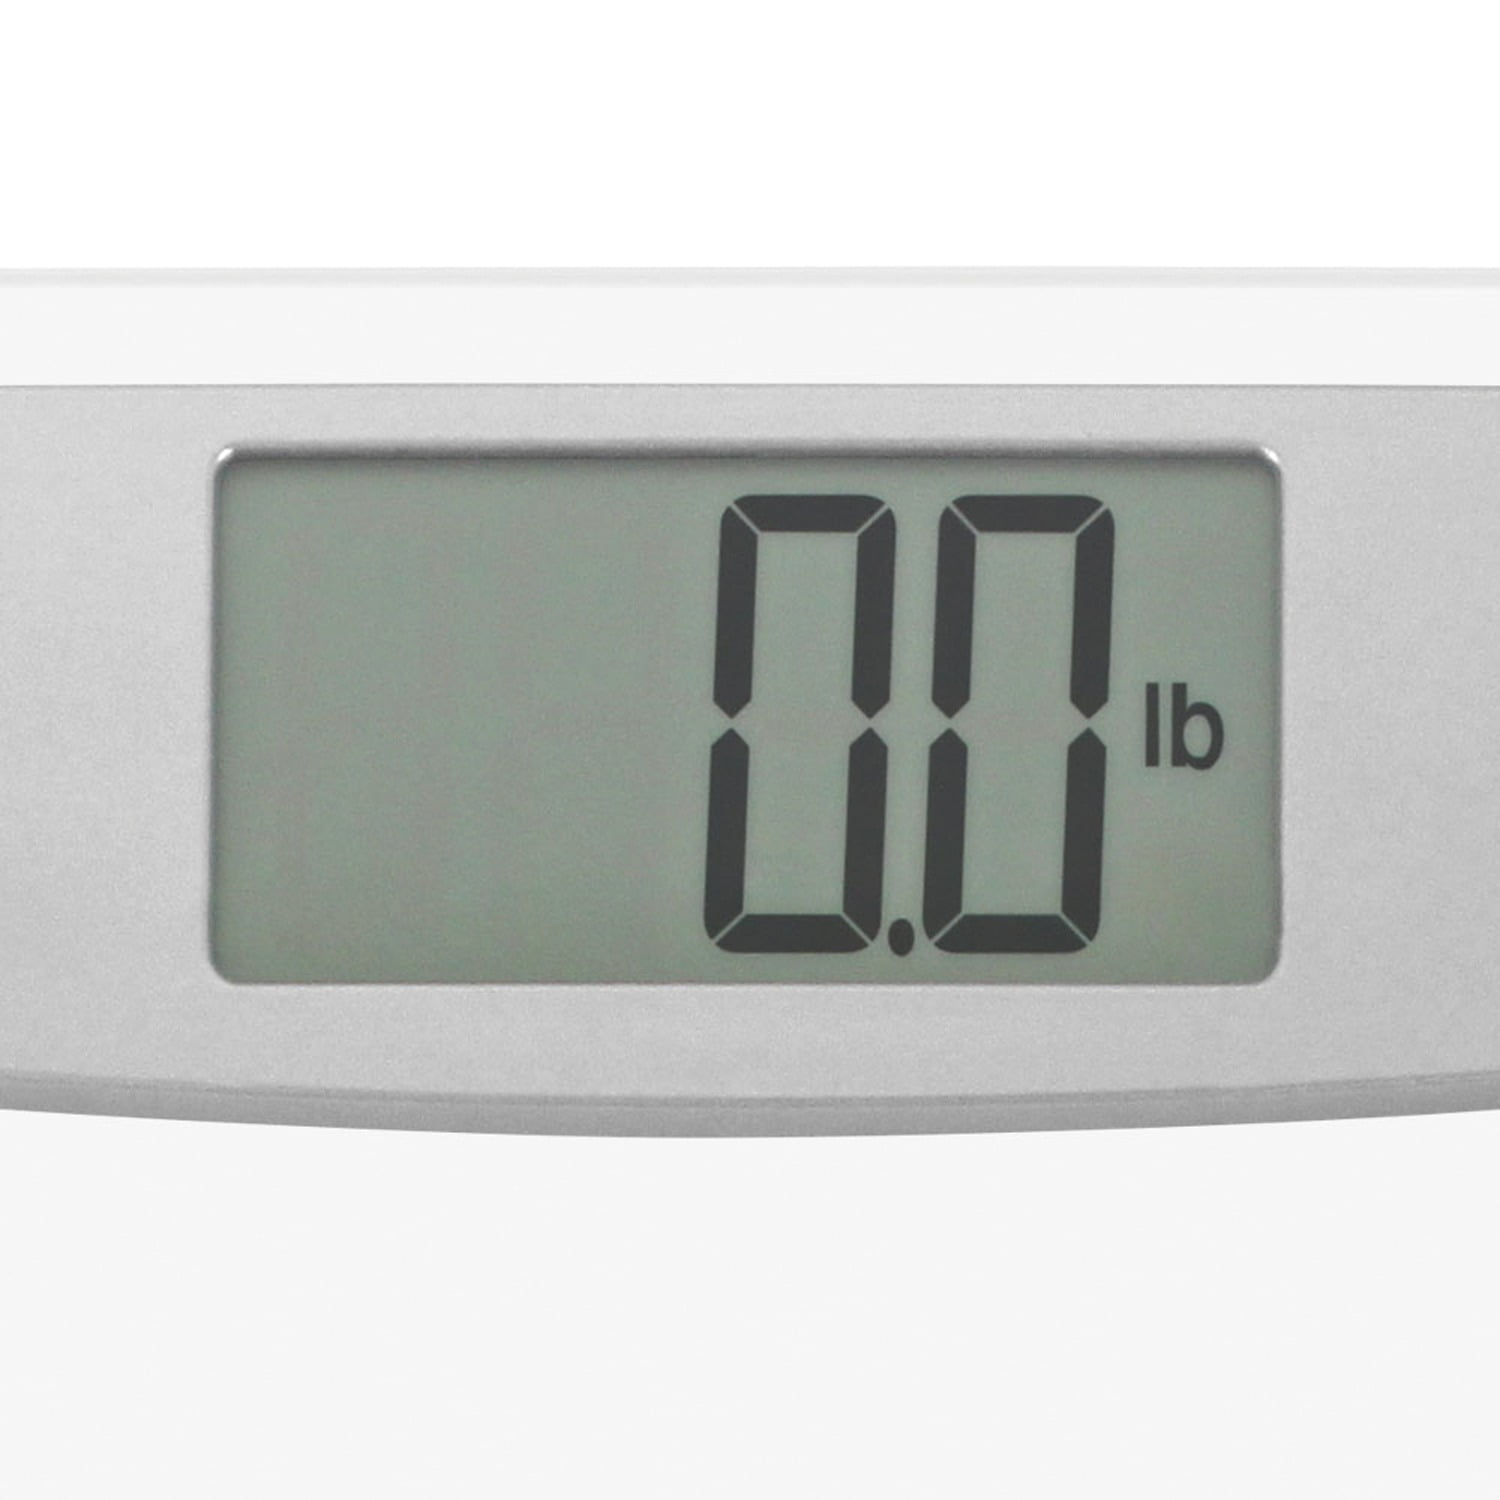 Escali US180B Ultra Slim Low Profile Bathroom Body Scale, LCD Digital  Display,400lb Capacity, Black/Silver 